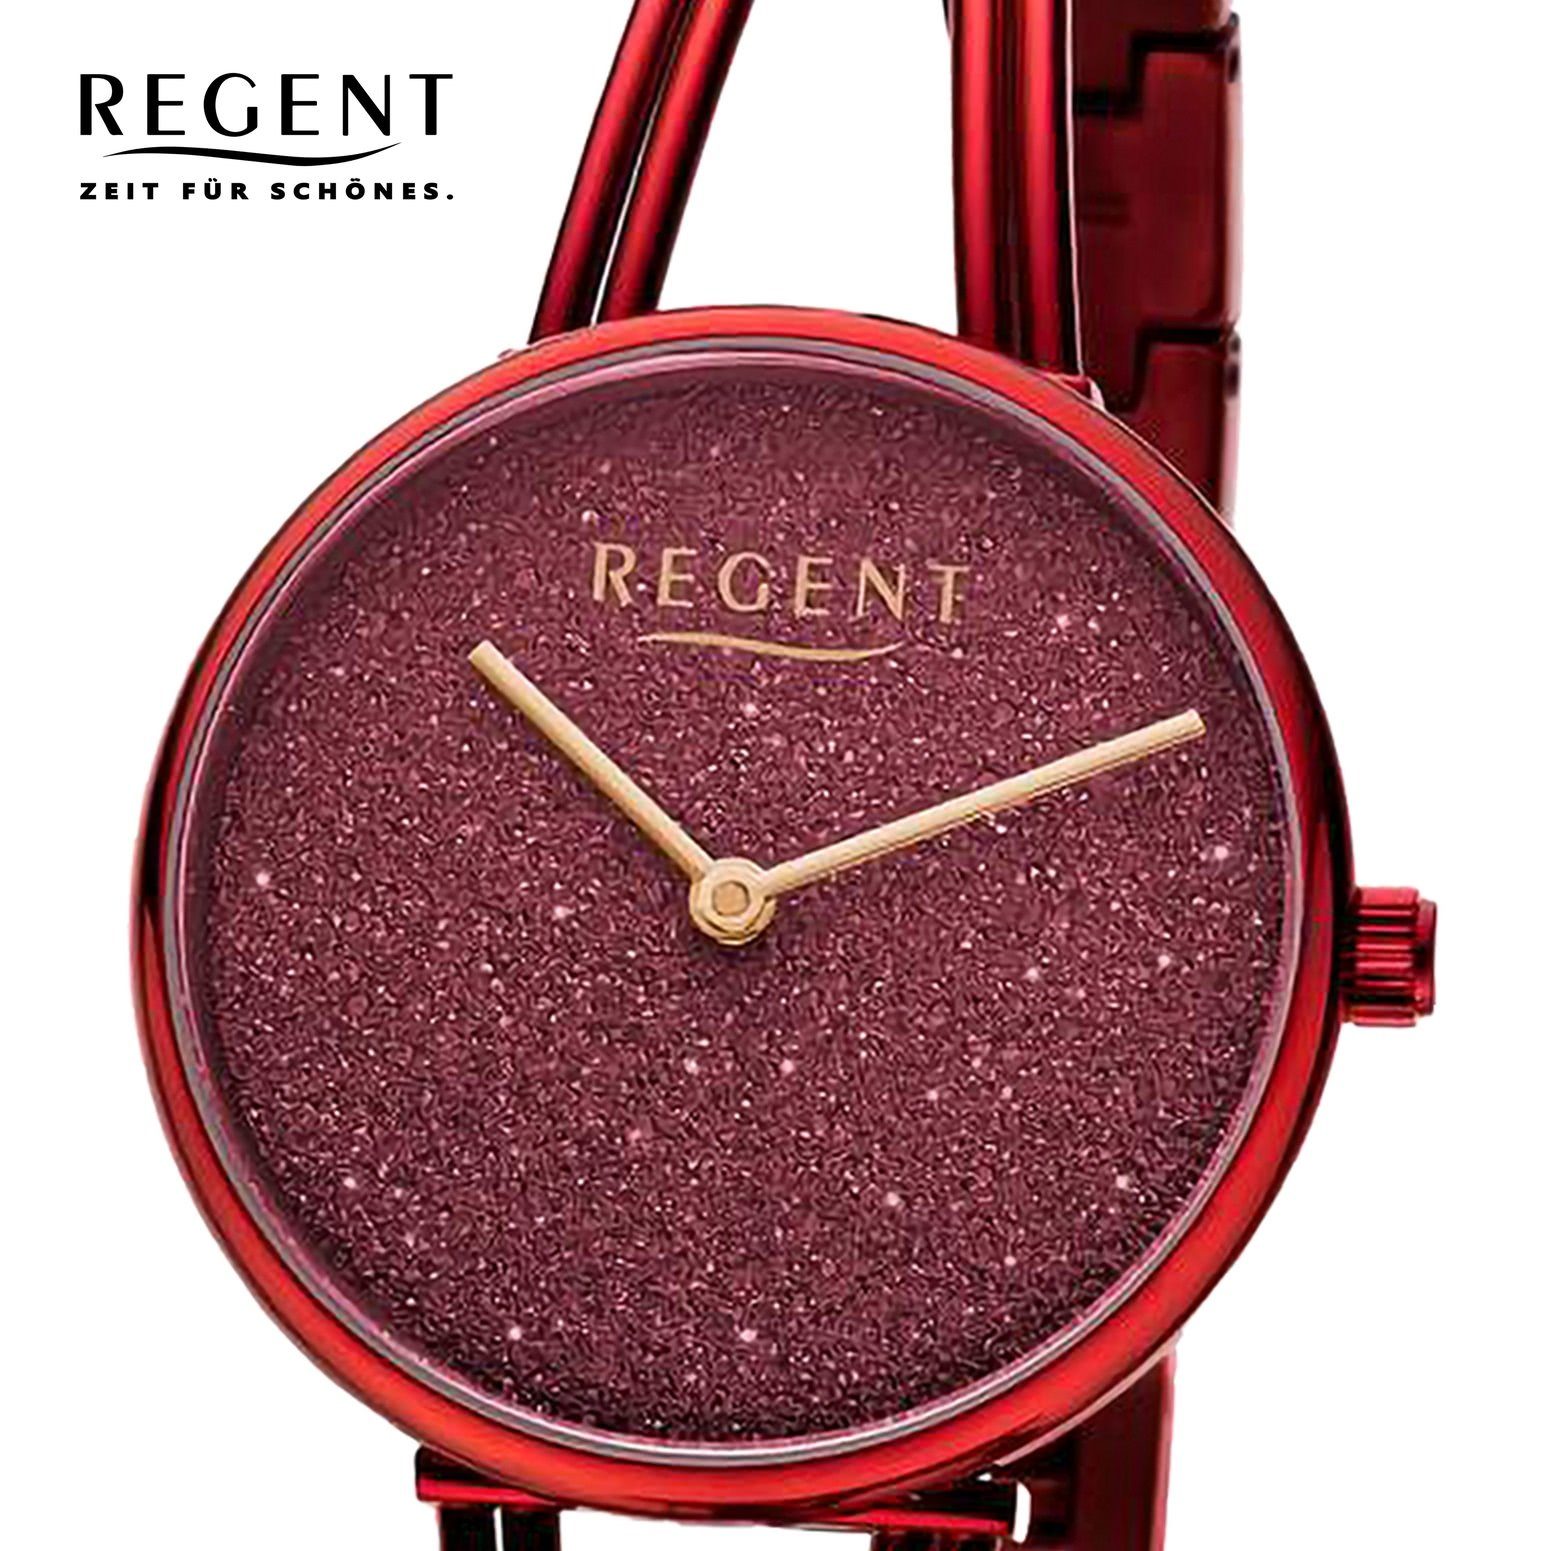 extra Metallarmband Armbanduhr Damen Quarzuhr (ca. Analog, 30mm), groß Armbanduhr Regent Damen Regent rund,